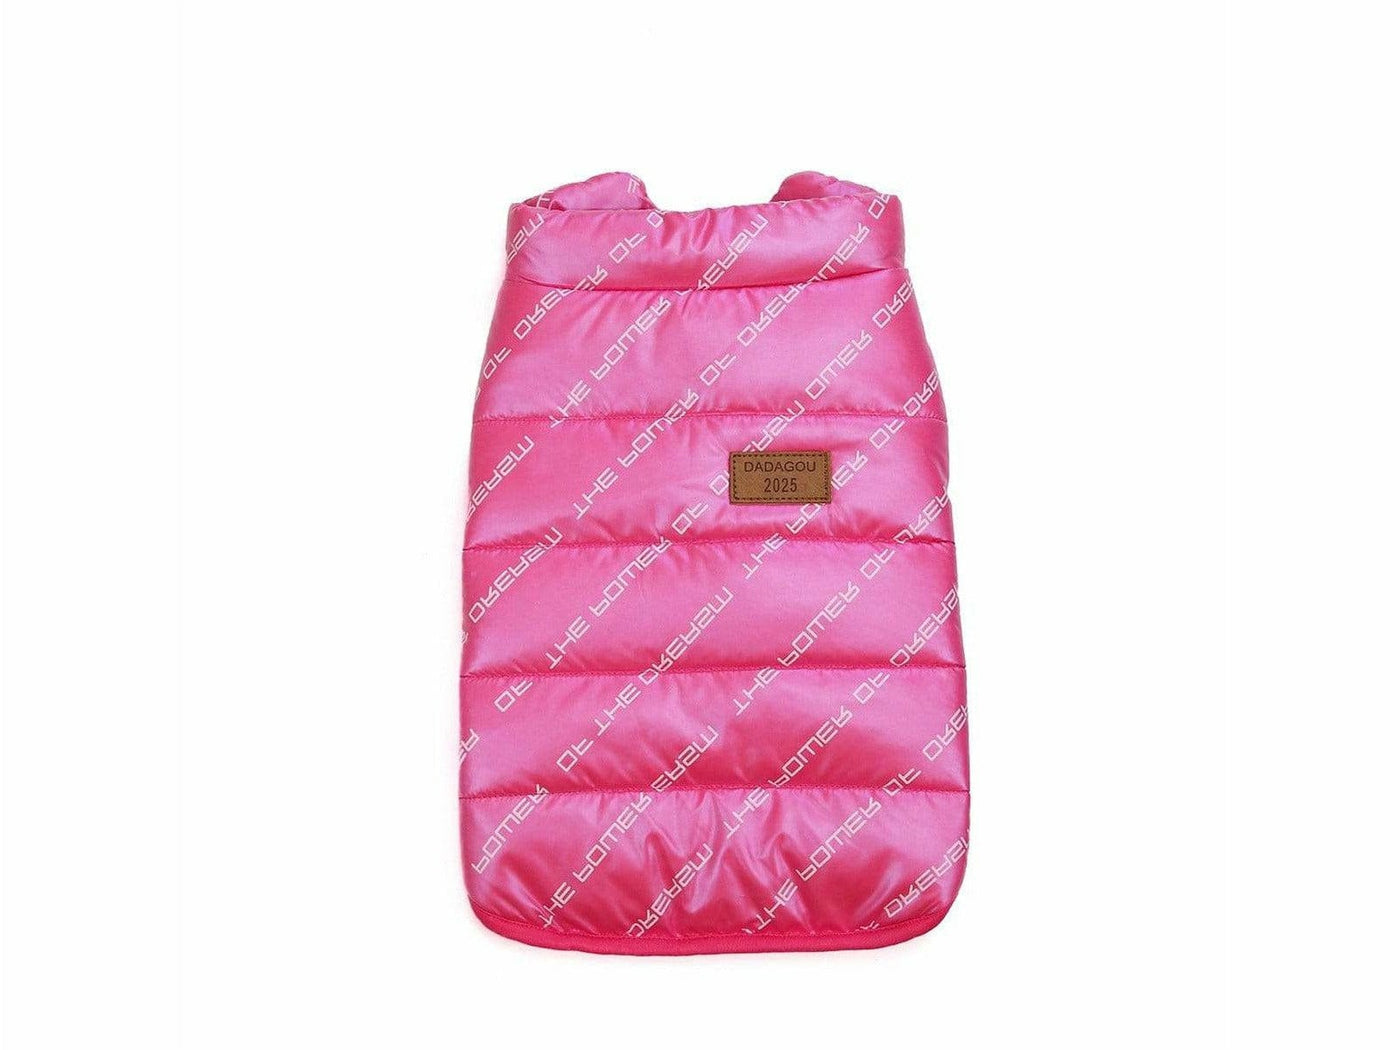 dog clothes Pink L AWYP-7